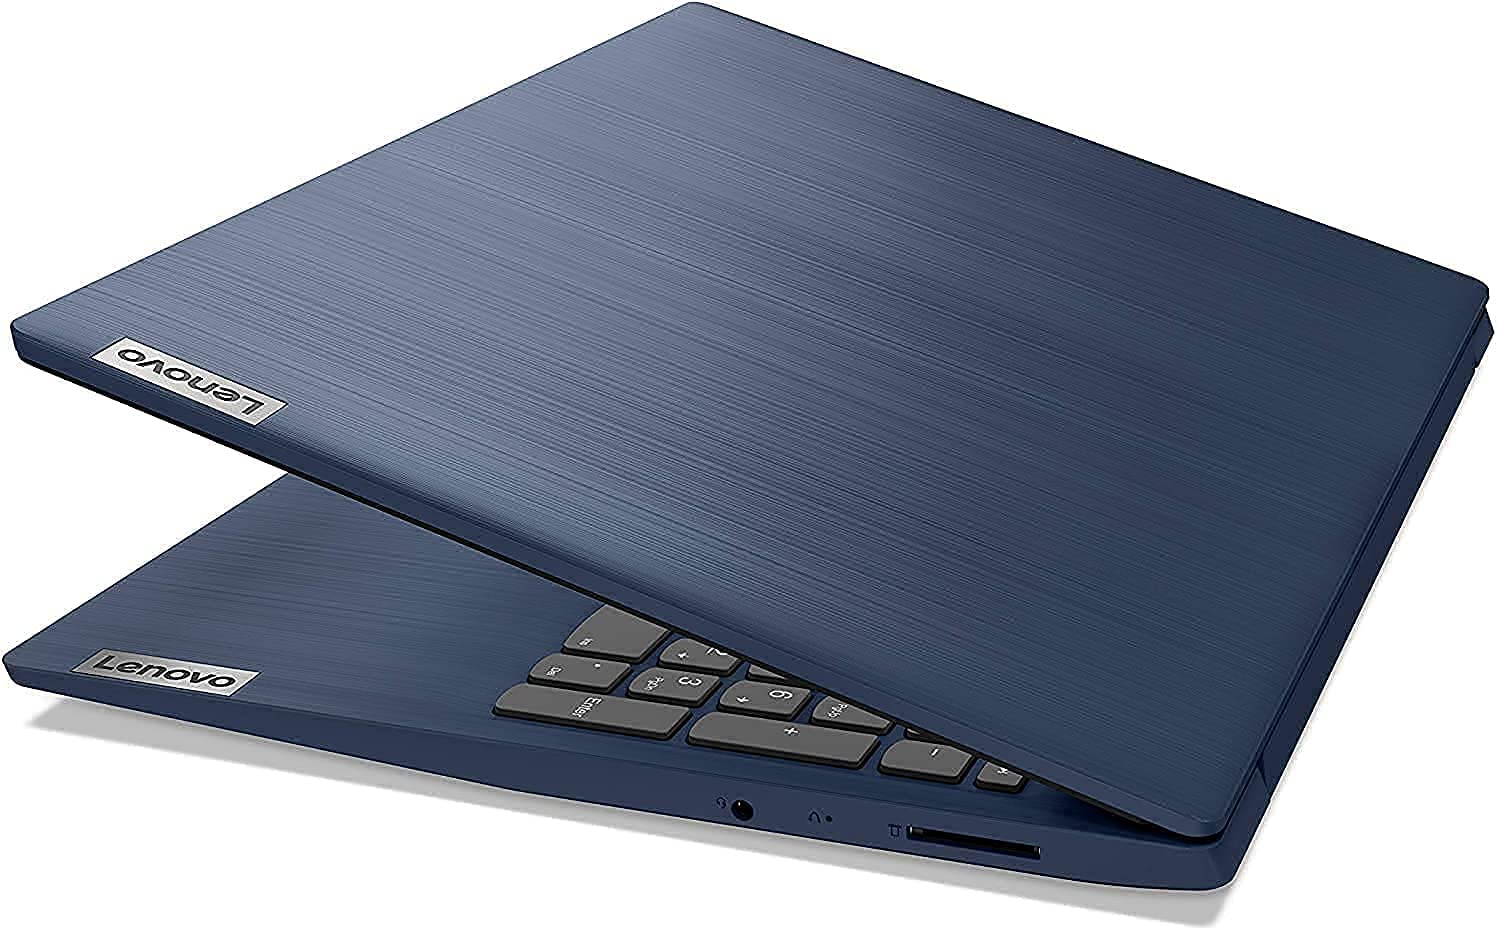 2021 Newest Lenovo 15 IdeaPad 3 15 6 HD Touchscreen Laptop Intel Quad Core i5 10210U Up to 4 2GHz Beat i7 8550U 12GB DDR4 RAM 512GB SSD Webcam WiFi 5 HDMI Windows 10 Abyss Blue JVQ Mousepad - DealYaSteal